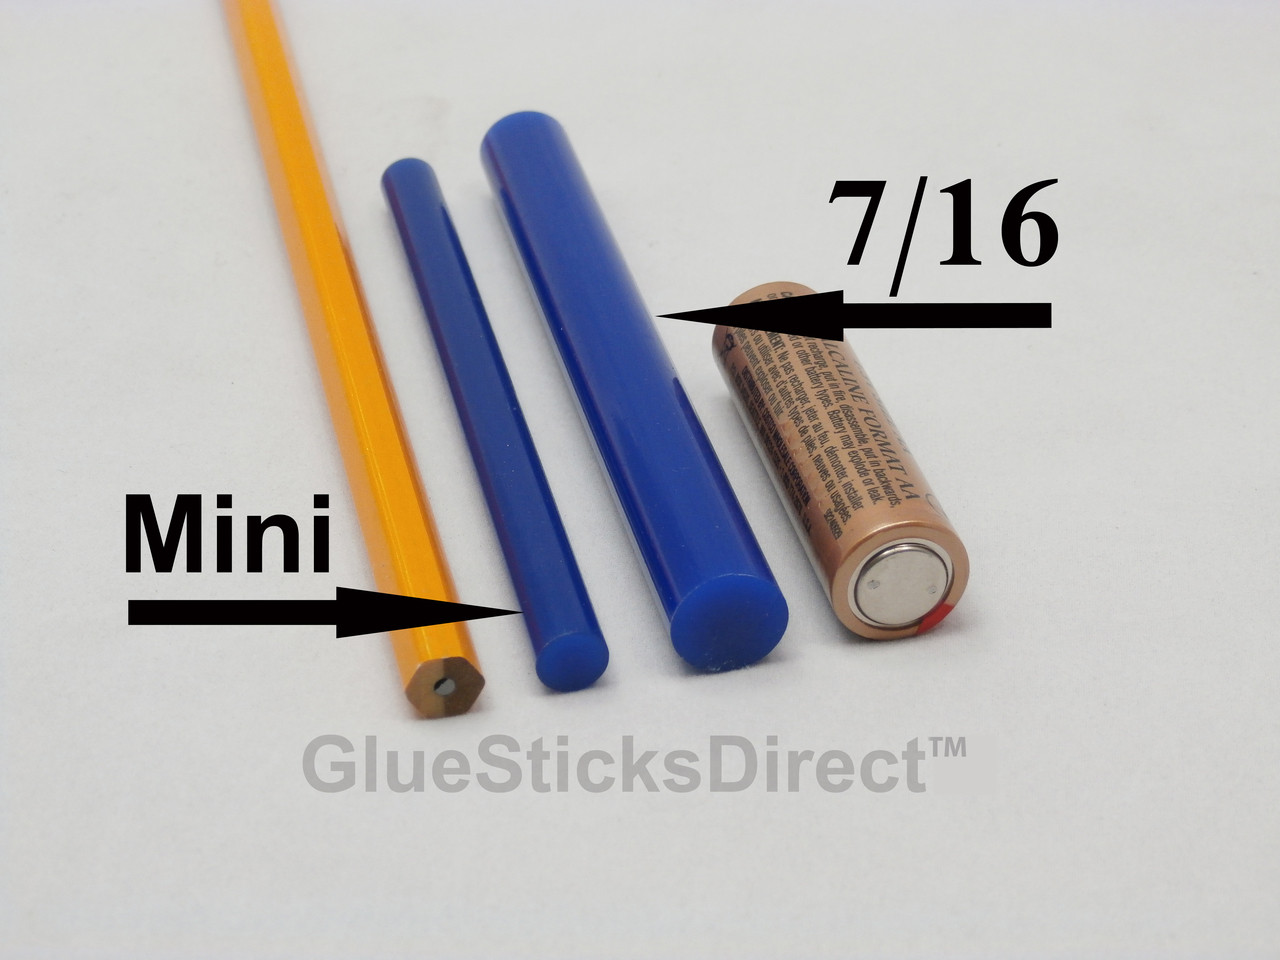 GlueSticksDirect Black Hair Fusion Glue Sticks Mini X 4" 24 Sticks